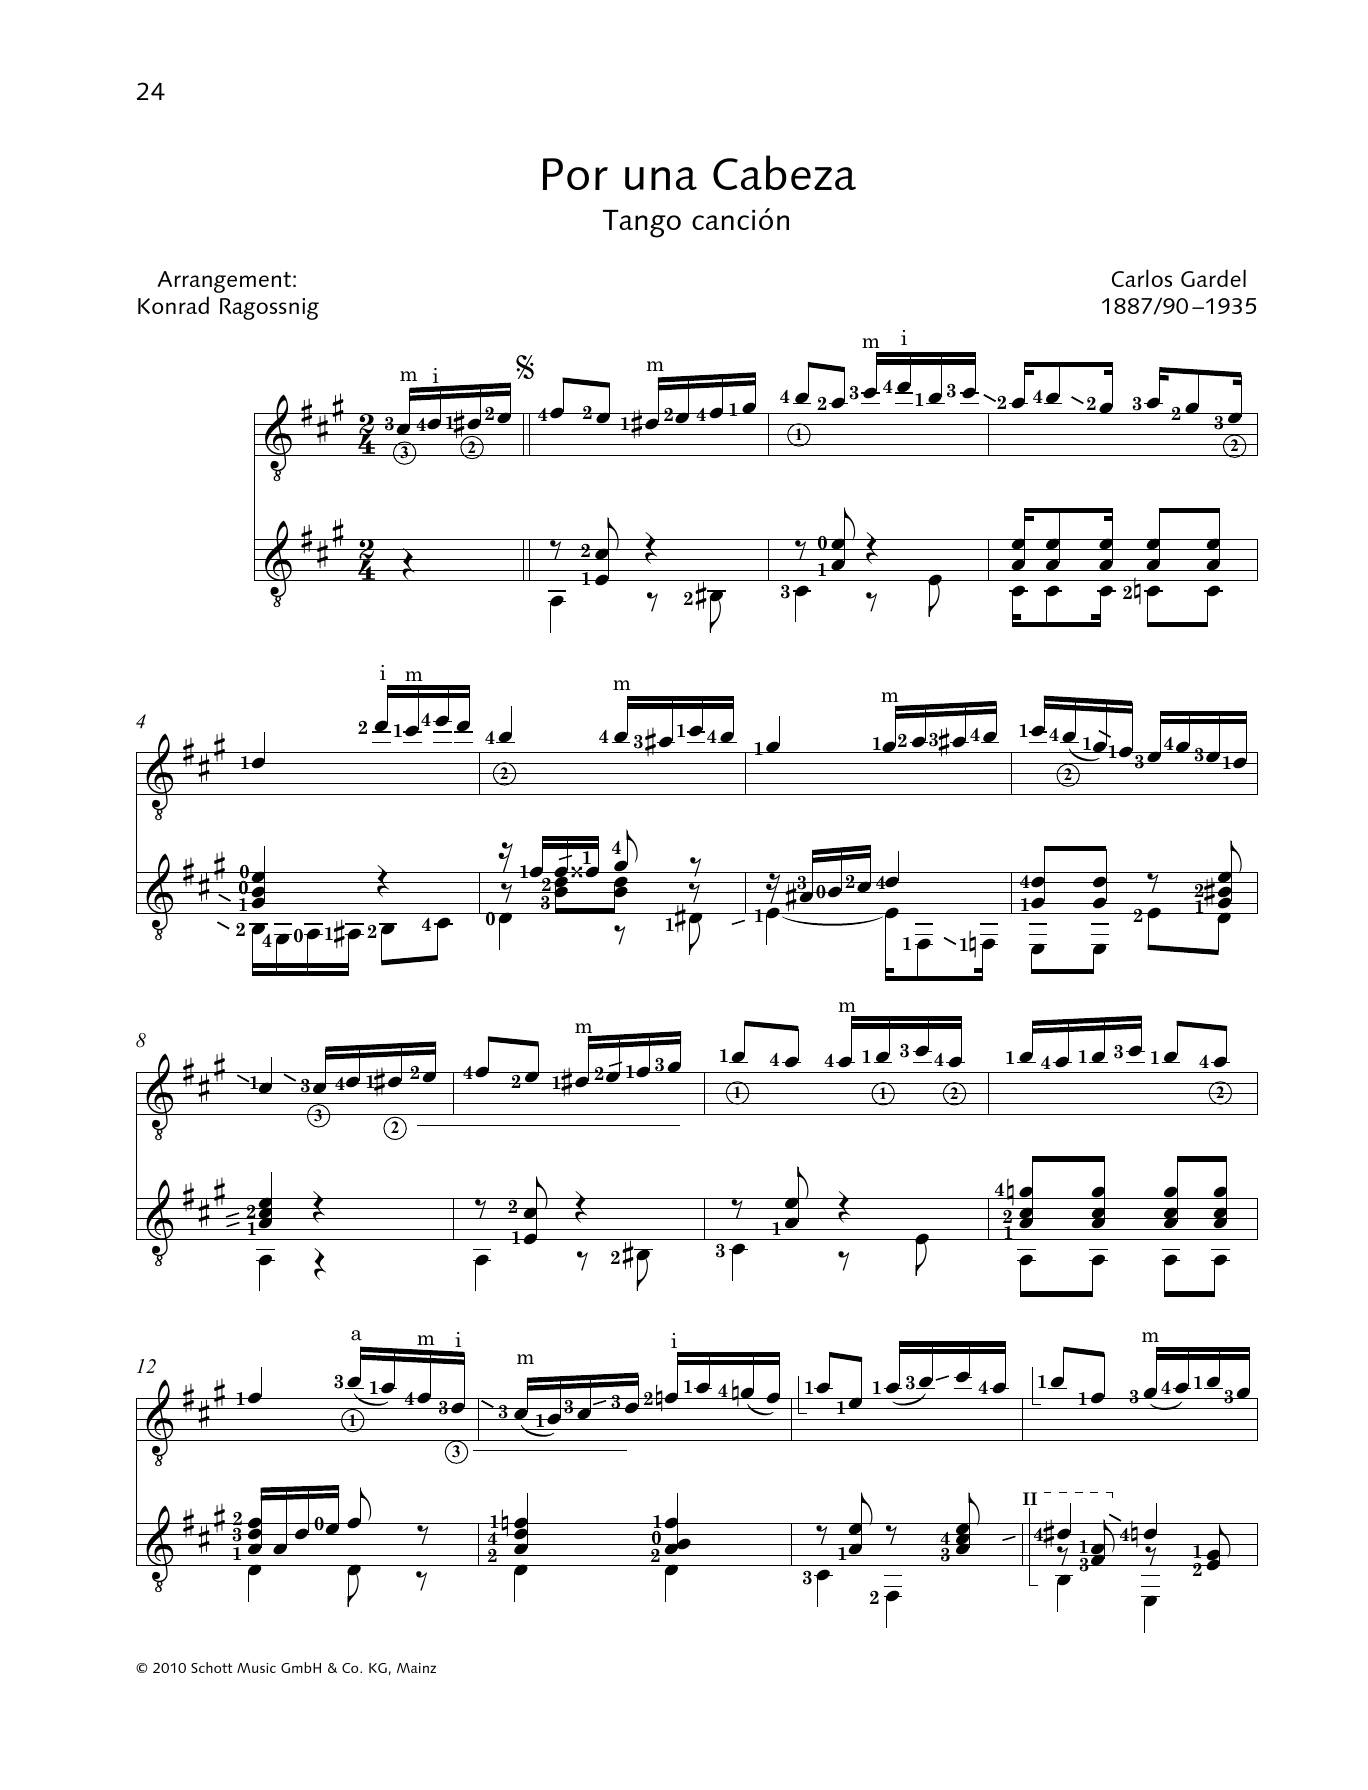 Download Carlos Gardel Por Una Cabeza - Full Score Sheet Music